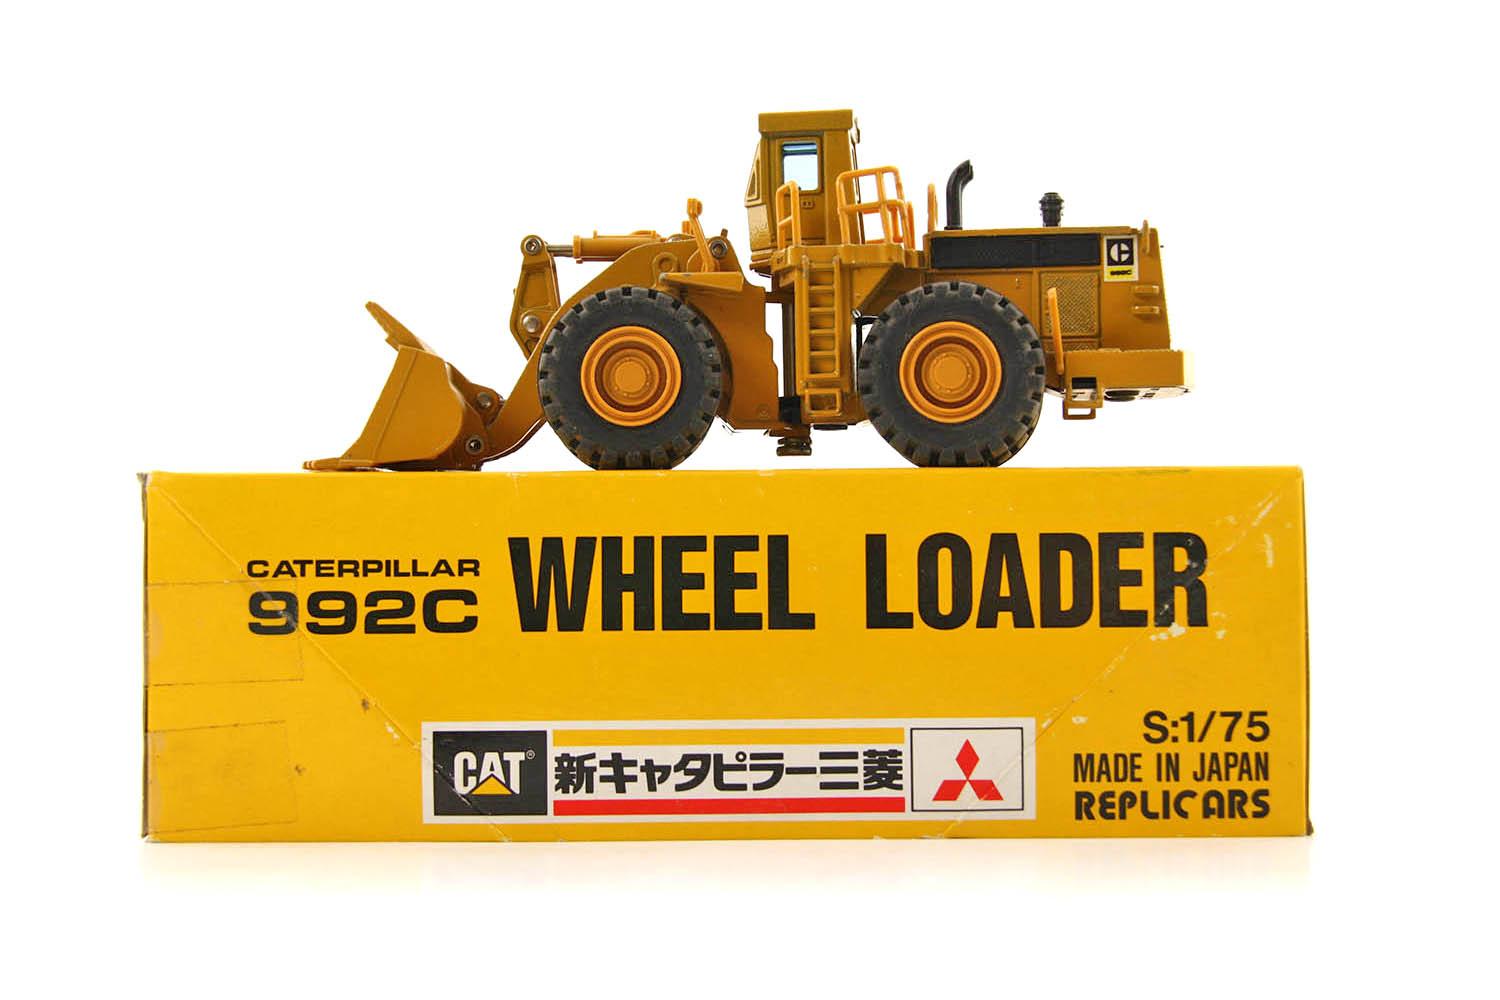 Caterpillar 992C Wheel Loader